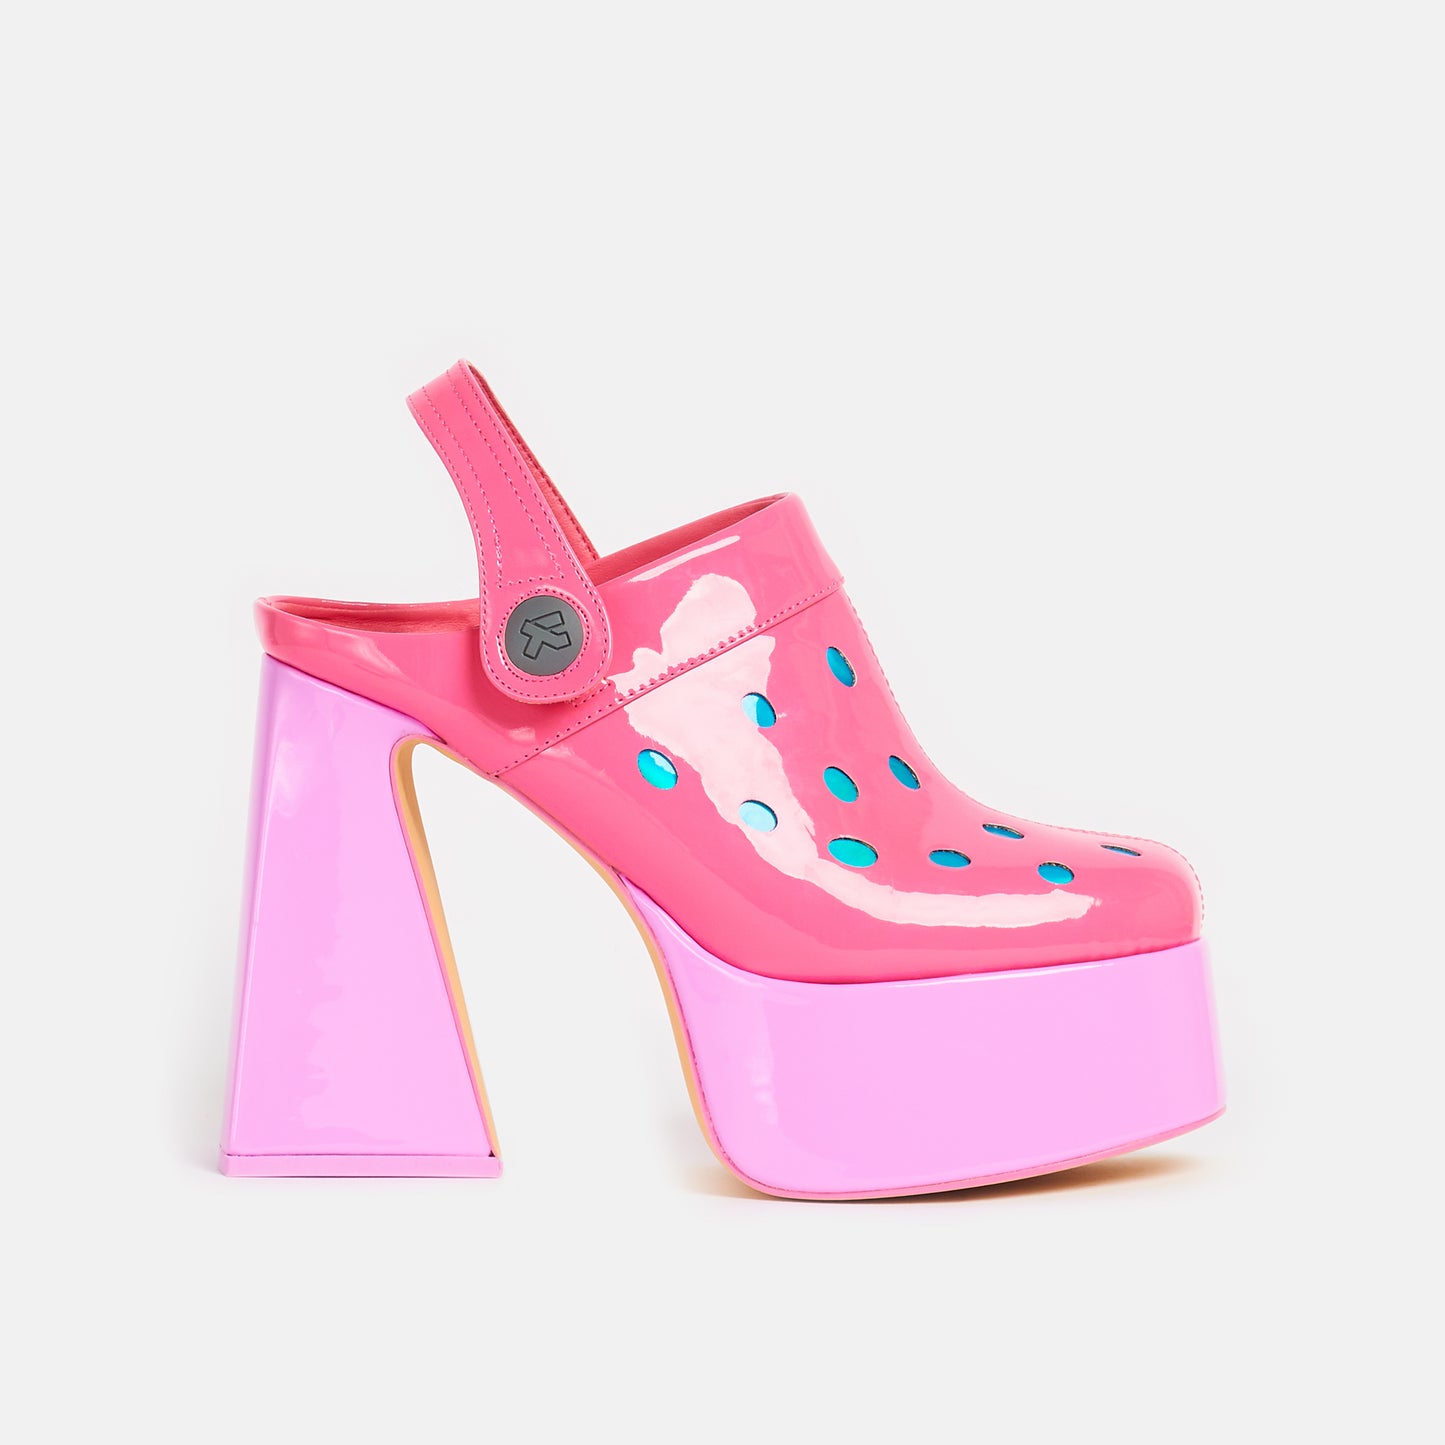 Candyfloss Powder Alien Heels - Shoes - KOI Footwear - Pink - Side View